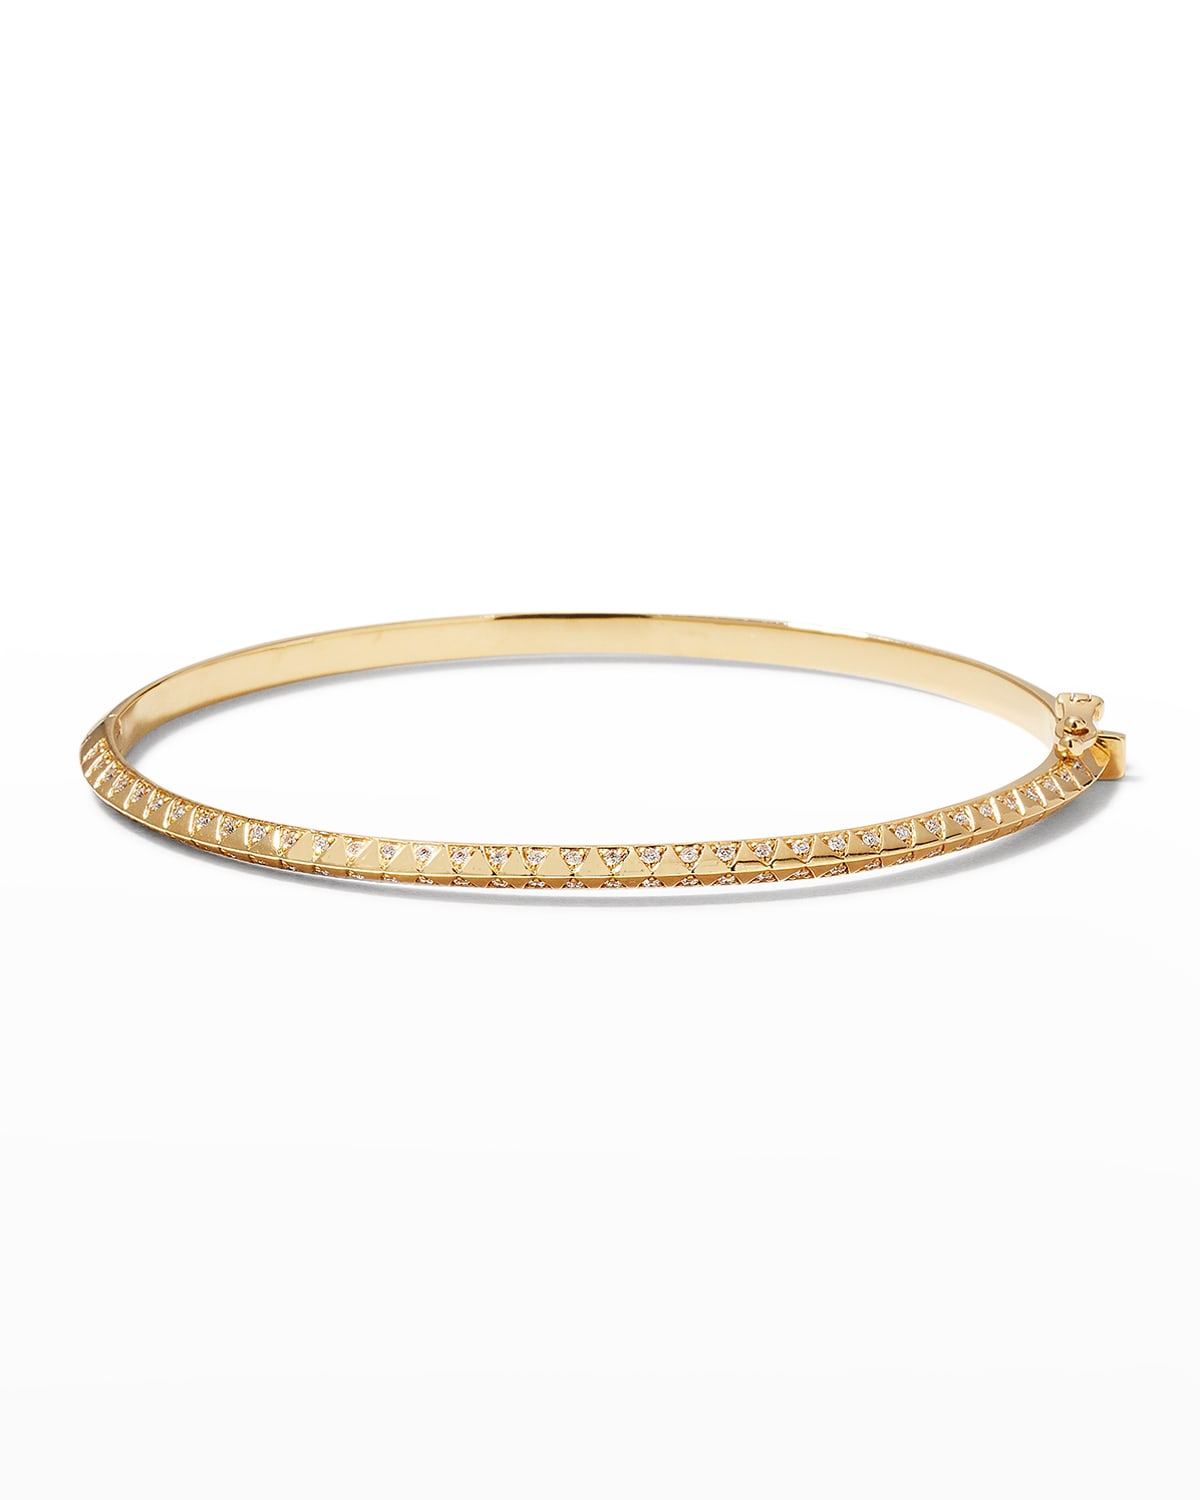 Harwell Godfrey 18k Yellow Gold Diamond Bangle Bracelet